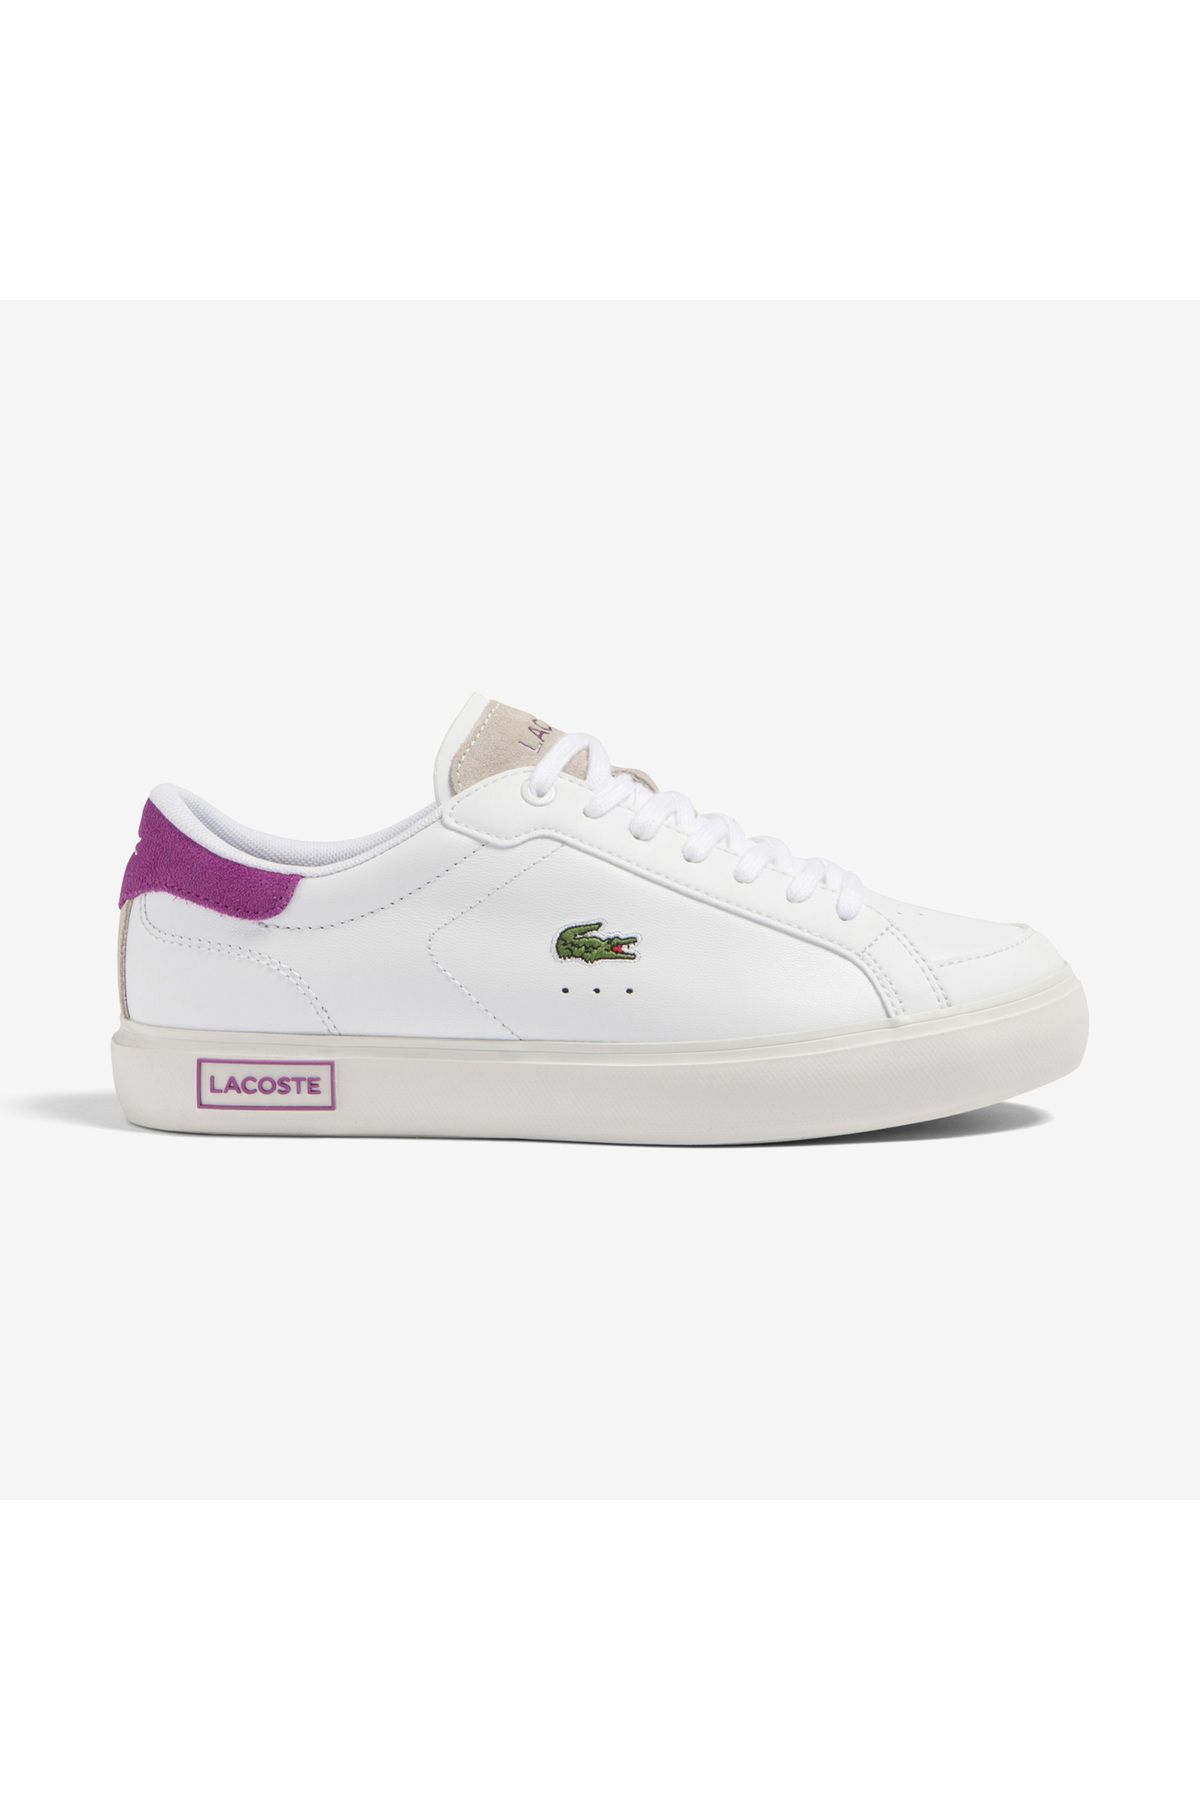 Lacoste Powercourt Kadın Beyaz Sneaker